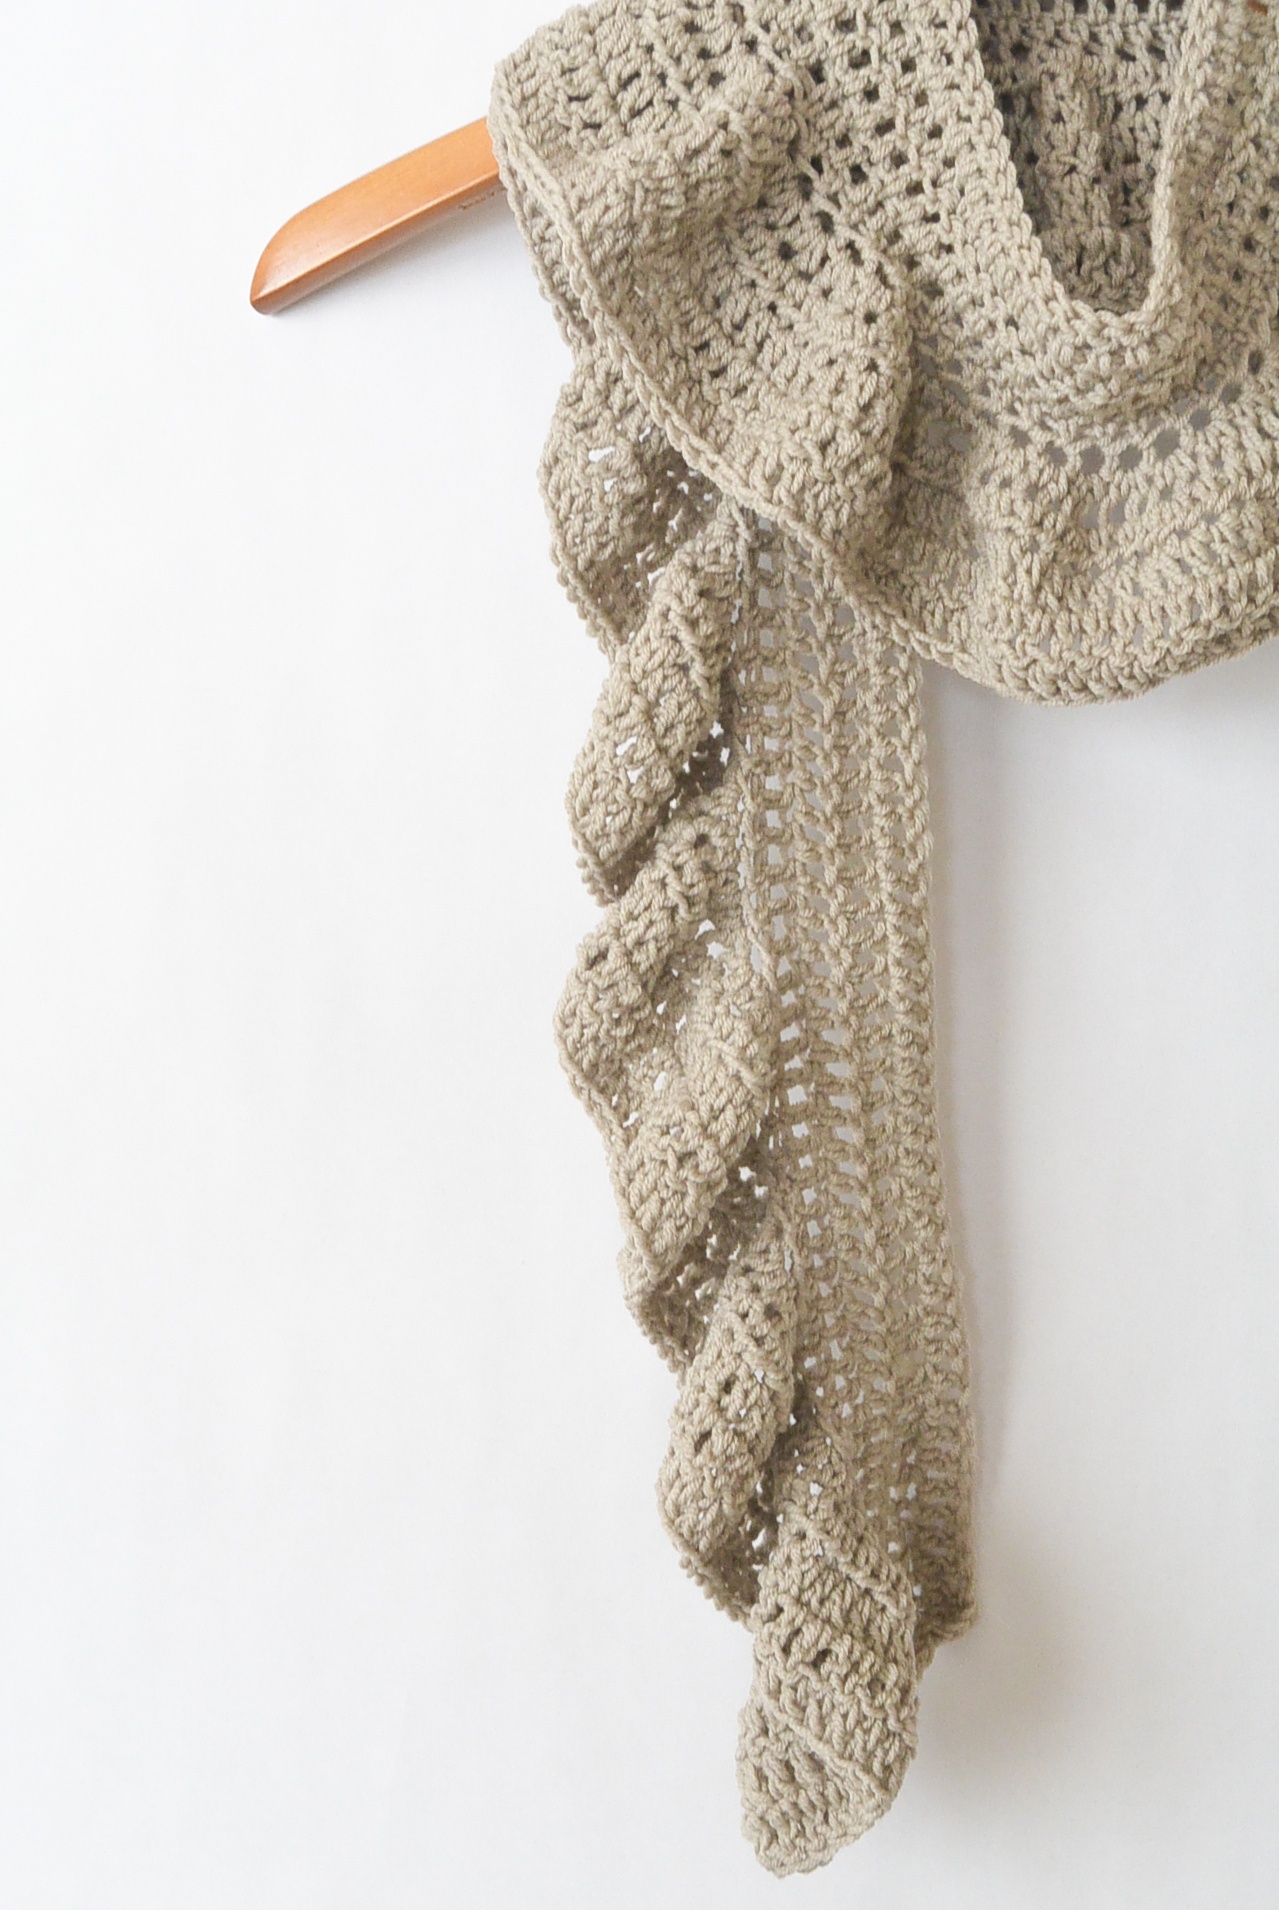 Merino Crocheted Ruffle Scarf Pattern – Mama In A Stitch - Free Printable Crochet Scarf Patterns